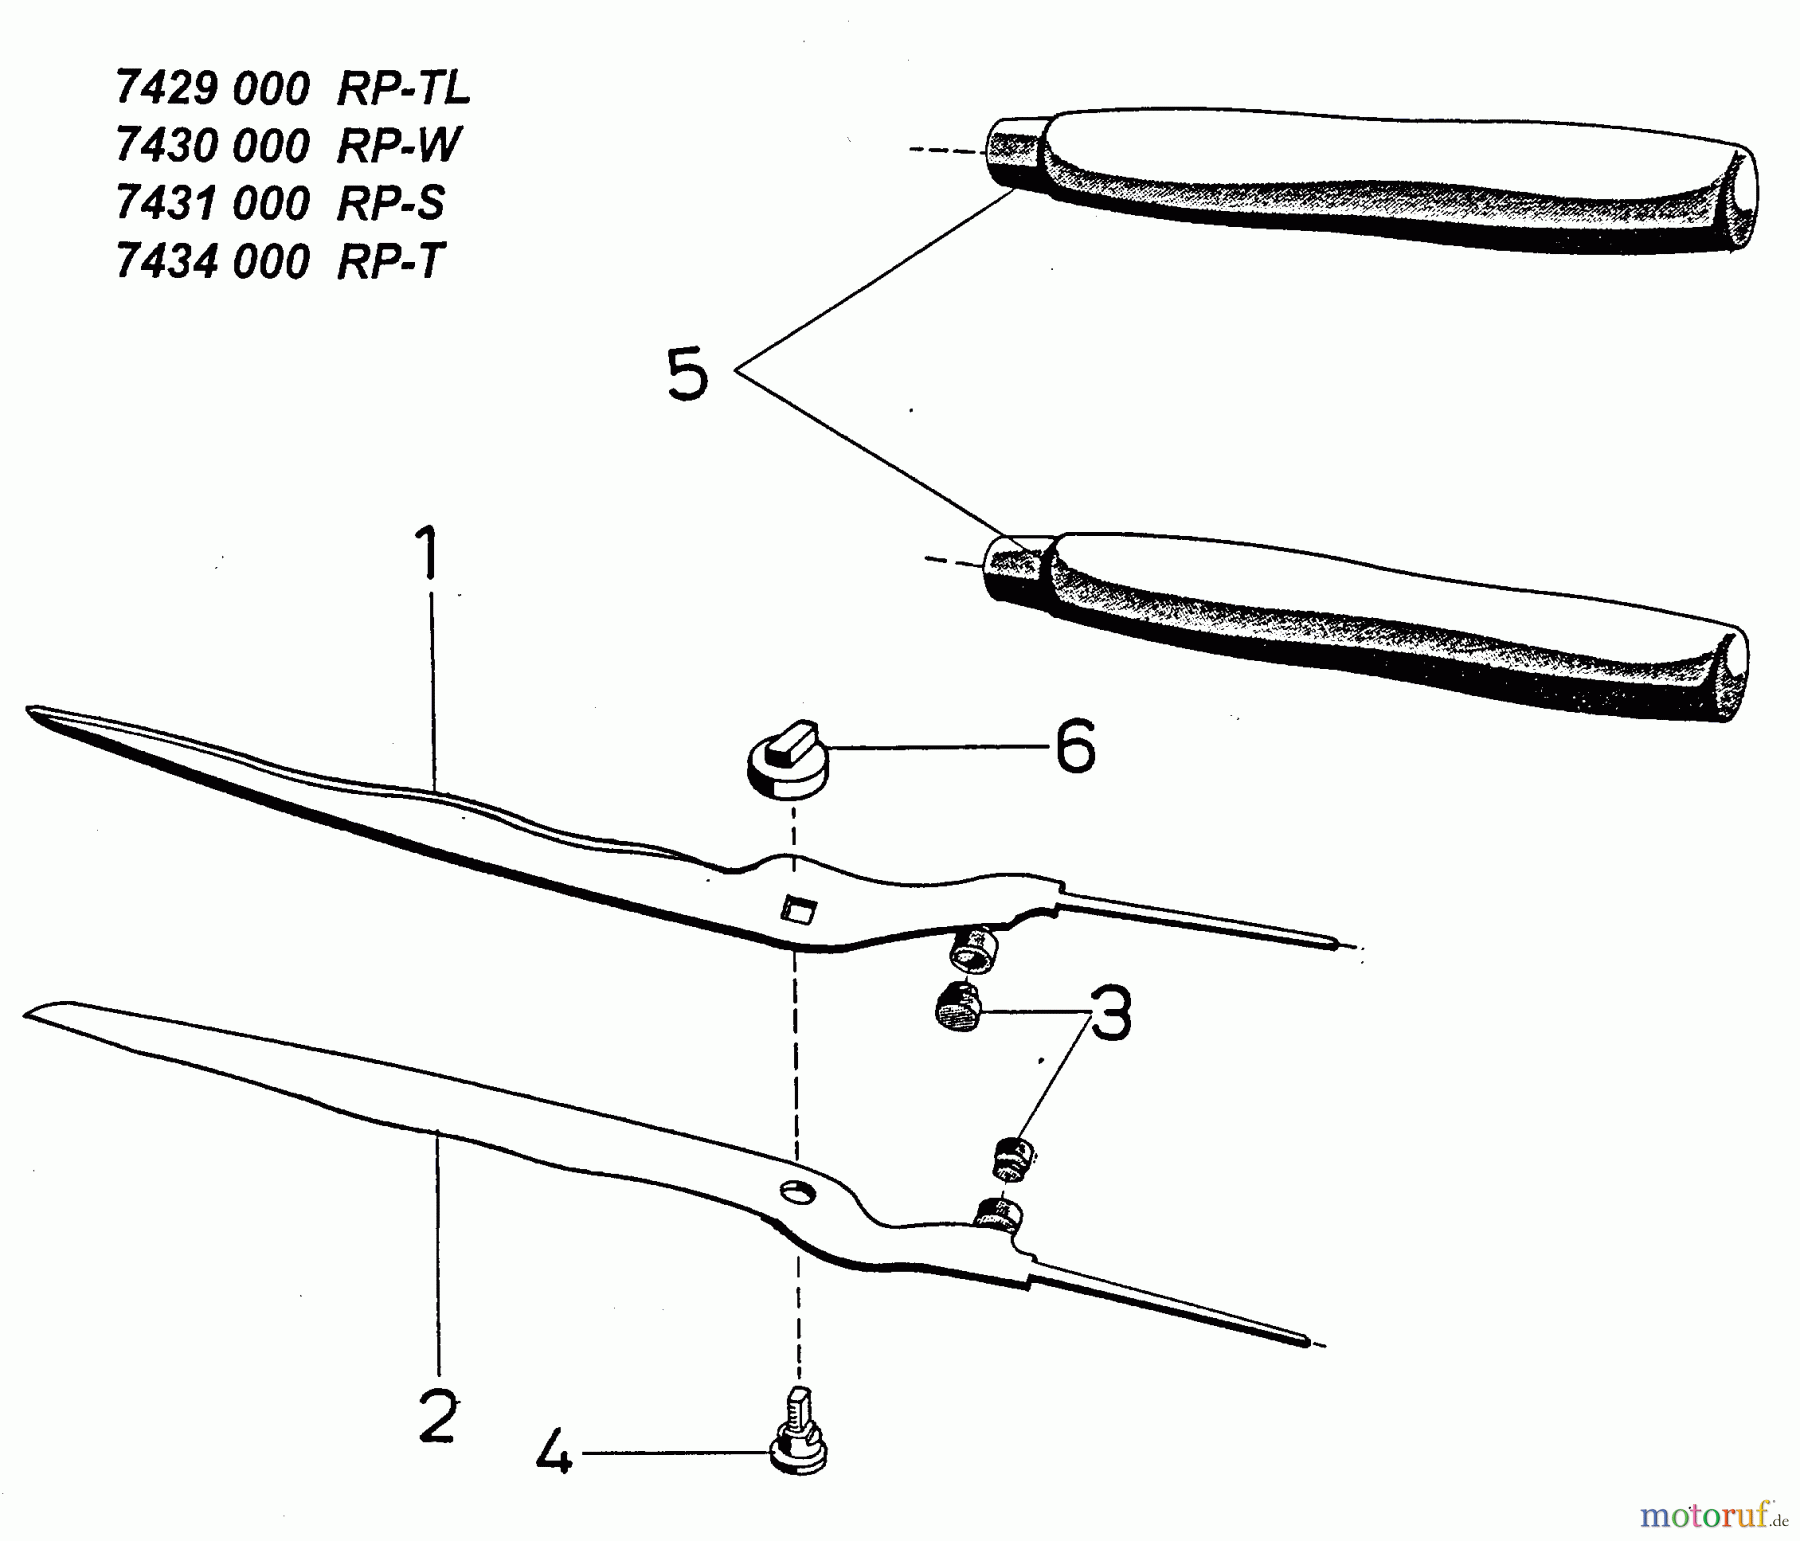  Wolf-Garten Hedge shears RP-W 7430000  (1998) Basic machine